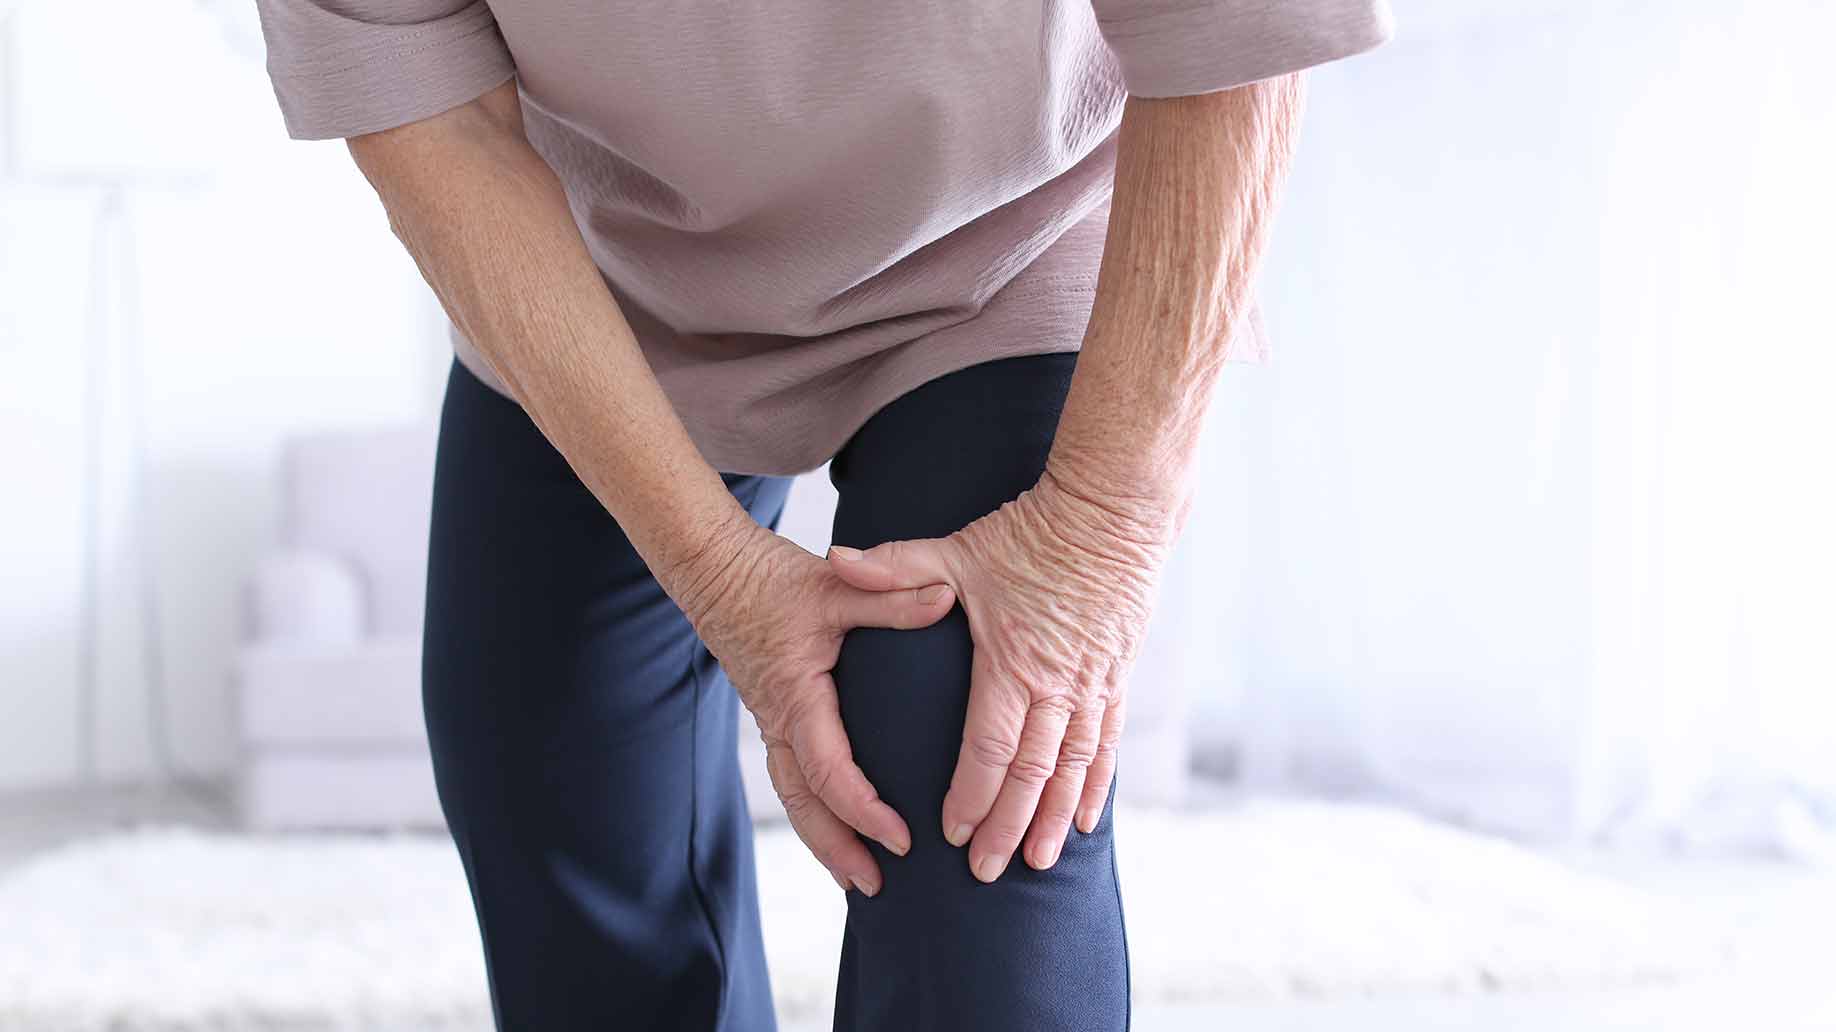 osteoporosis vitamin d weak pain knee joints bones calcium break fracture menopause